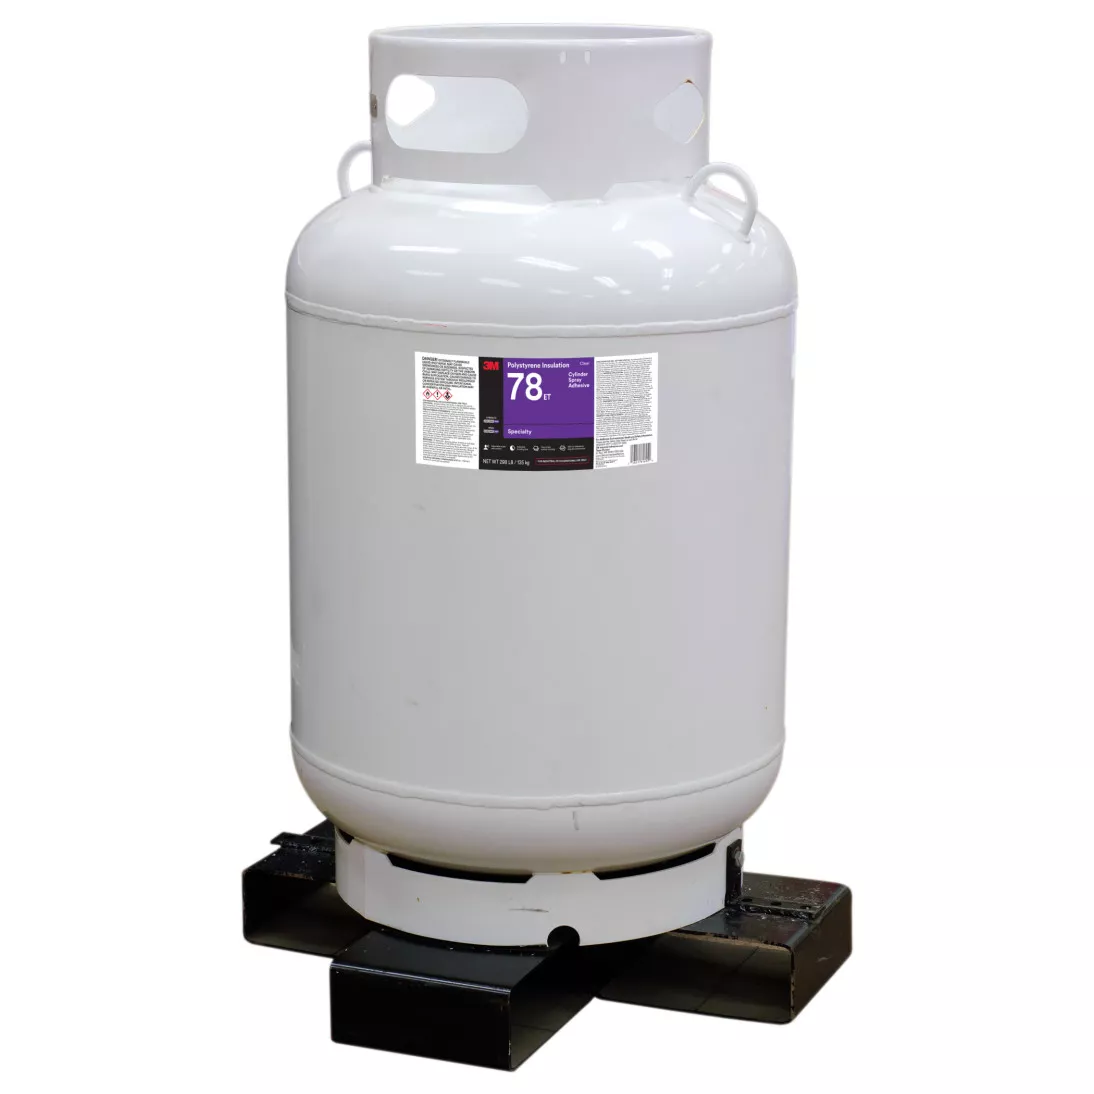 3M™ Polystyrene Insulation 78 ET Cylinder Spray Adhesive, Clear, Jumbo
Cylinder (Net Wt 298 lb)